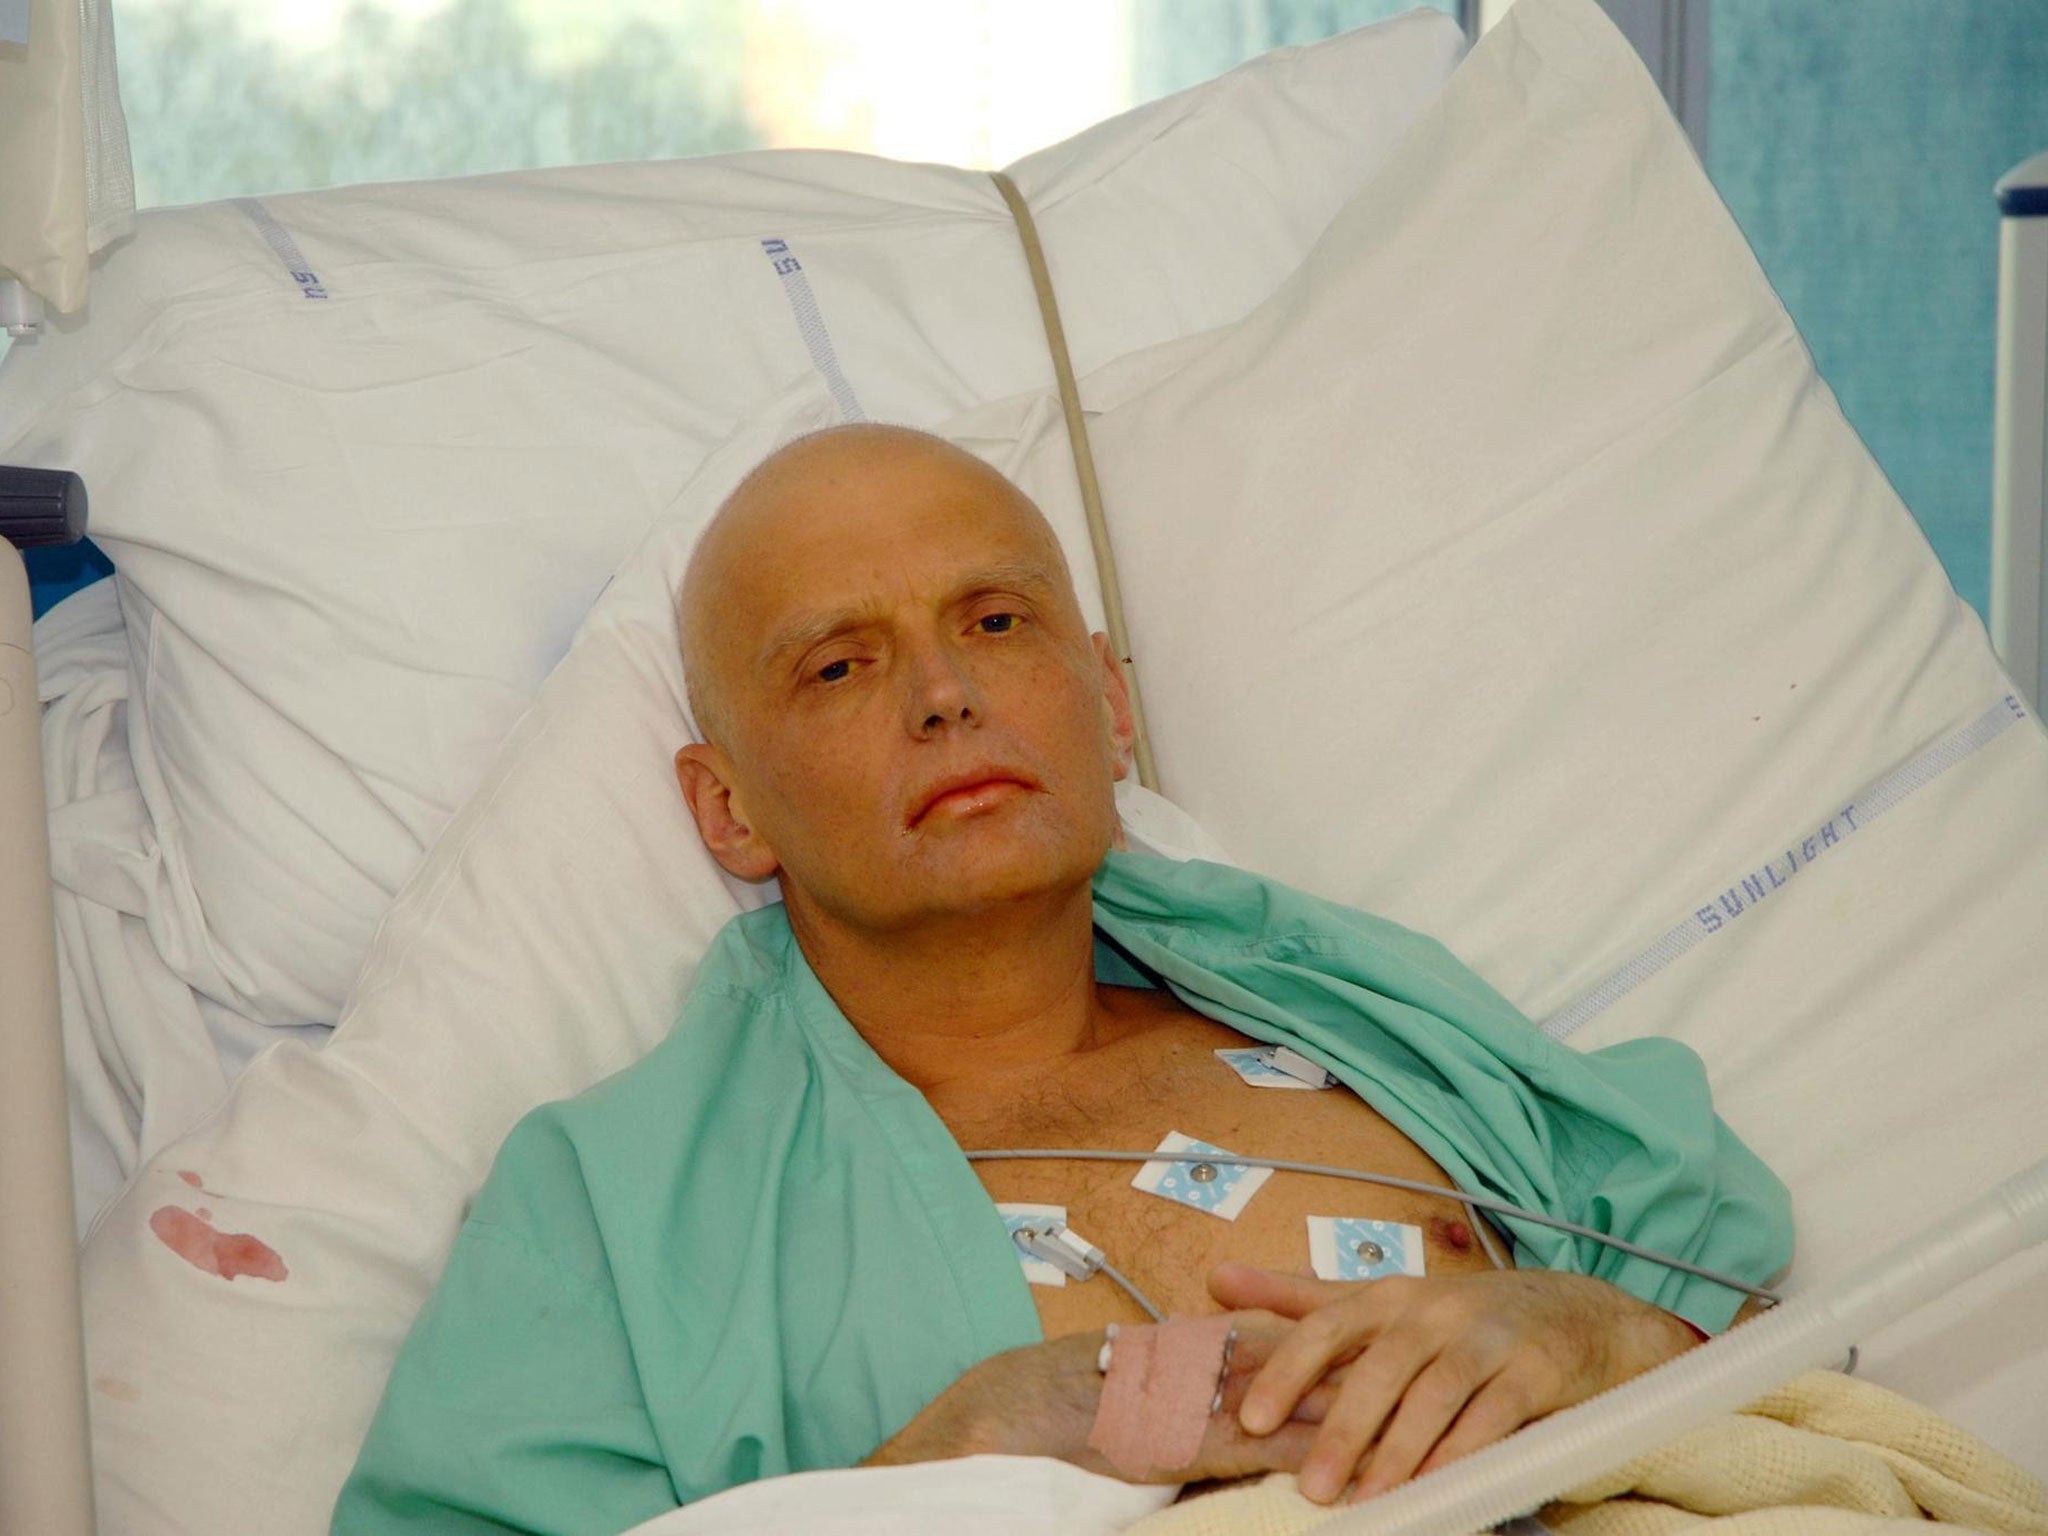 Alexander Litvinenko: The former KGB agent died from polonium-210 poisoning in 2006